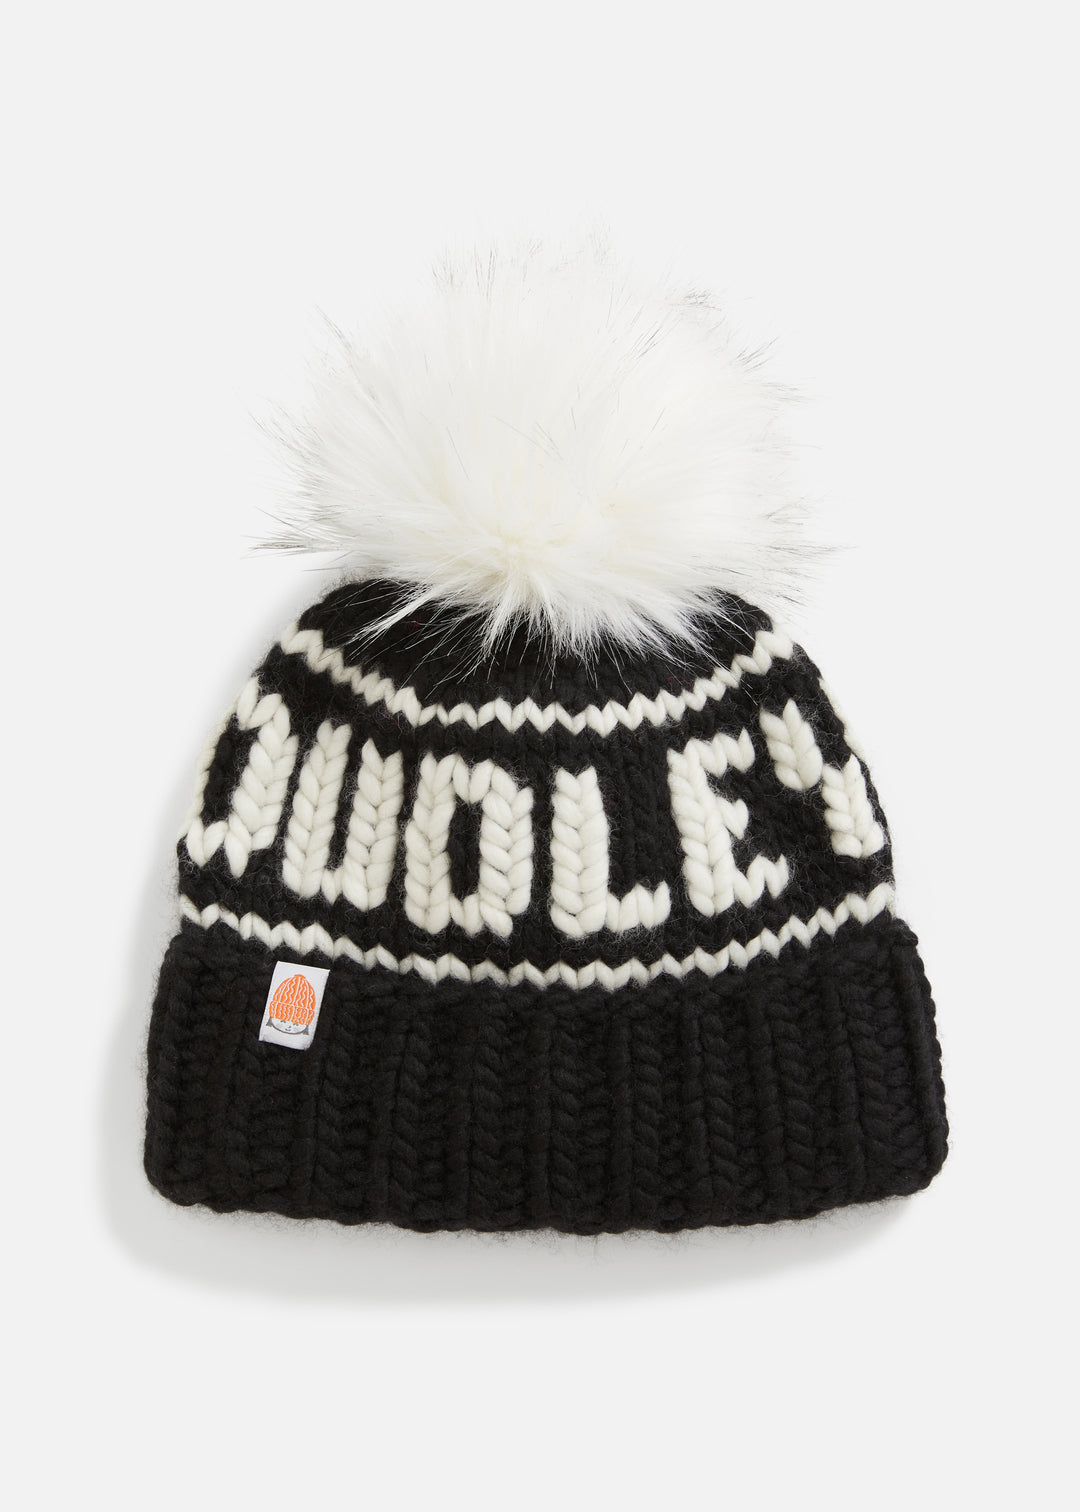 Dudley x STIK Hat (Black)